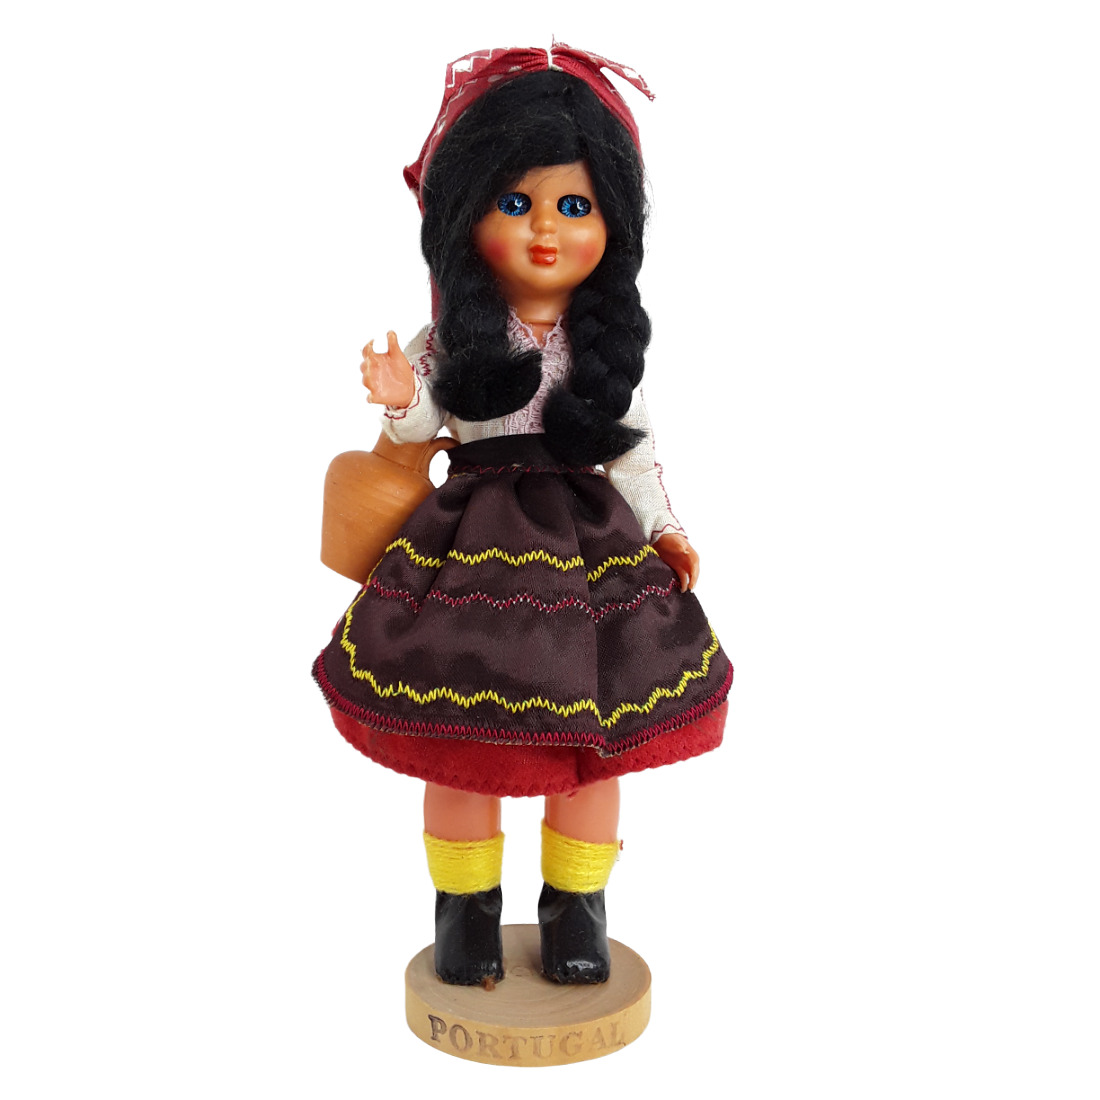 Portugal Souvenir Doll 9" Woman Girl Plastic Closing Eyes Water Jug